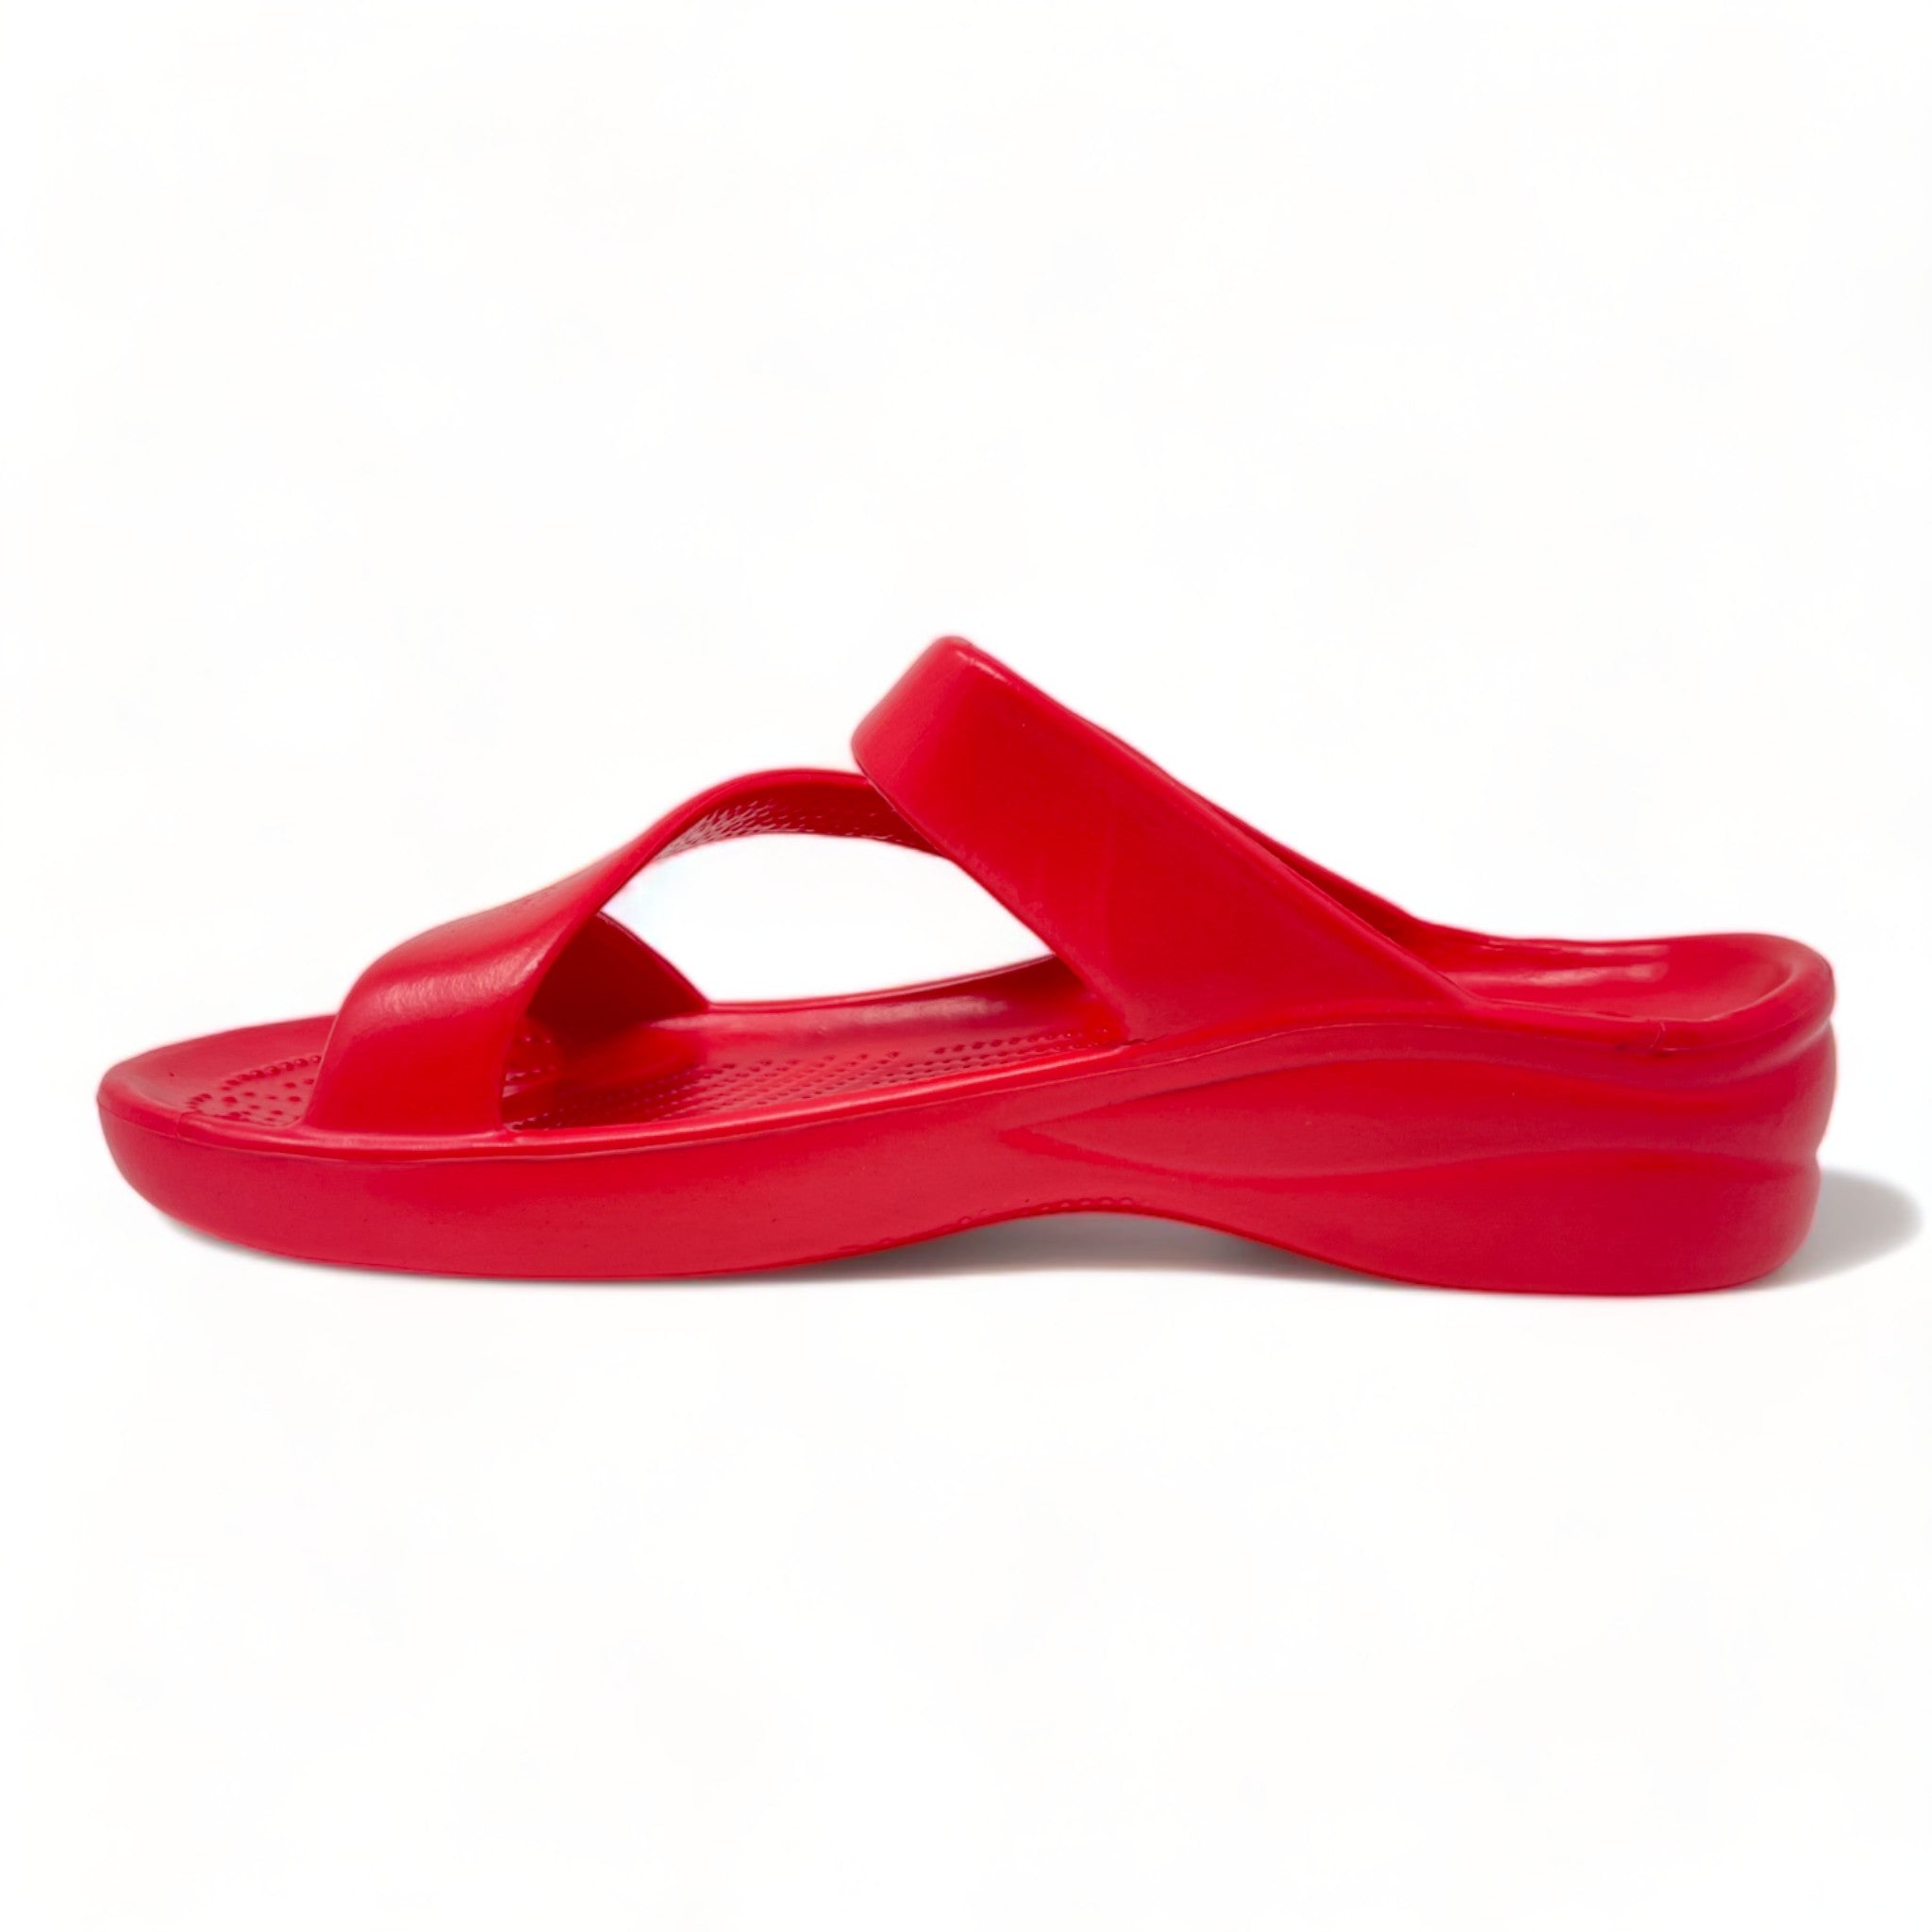 Women's Z Sandals - Red